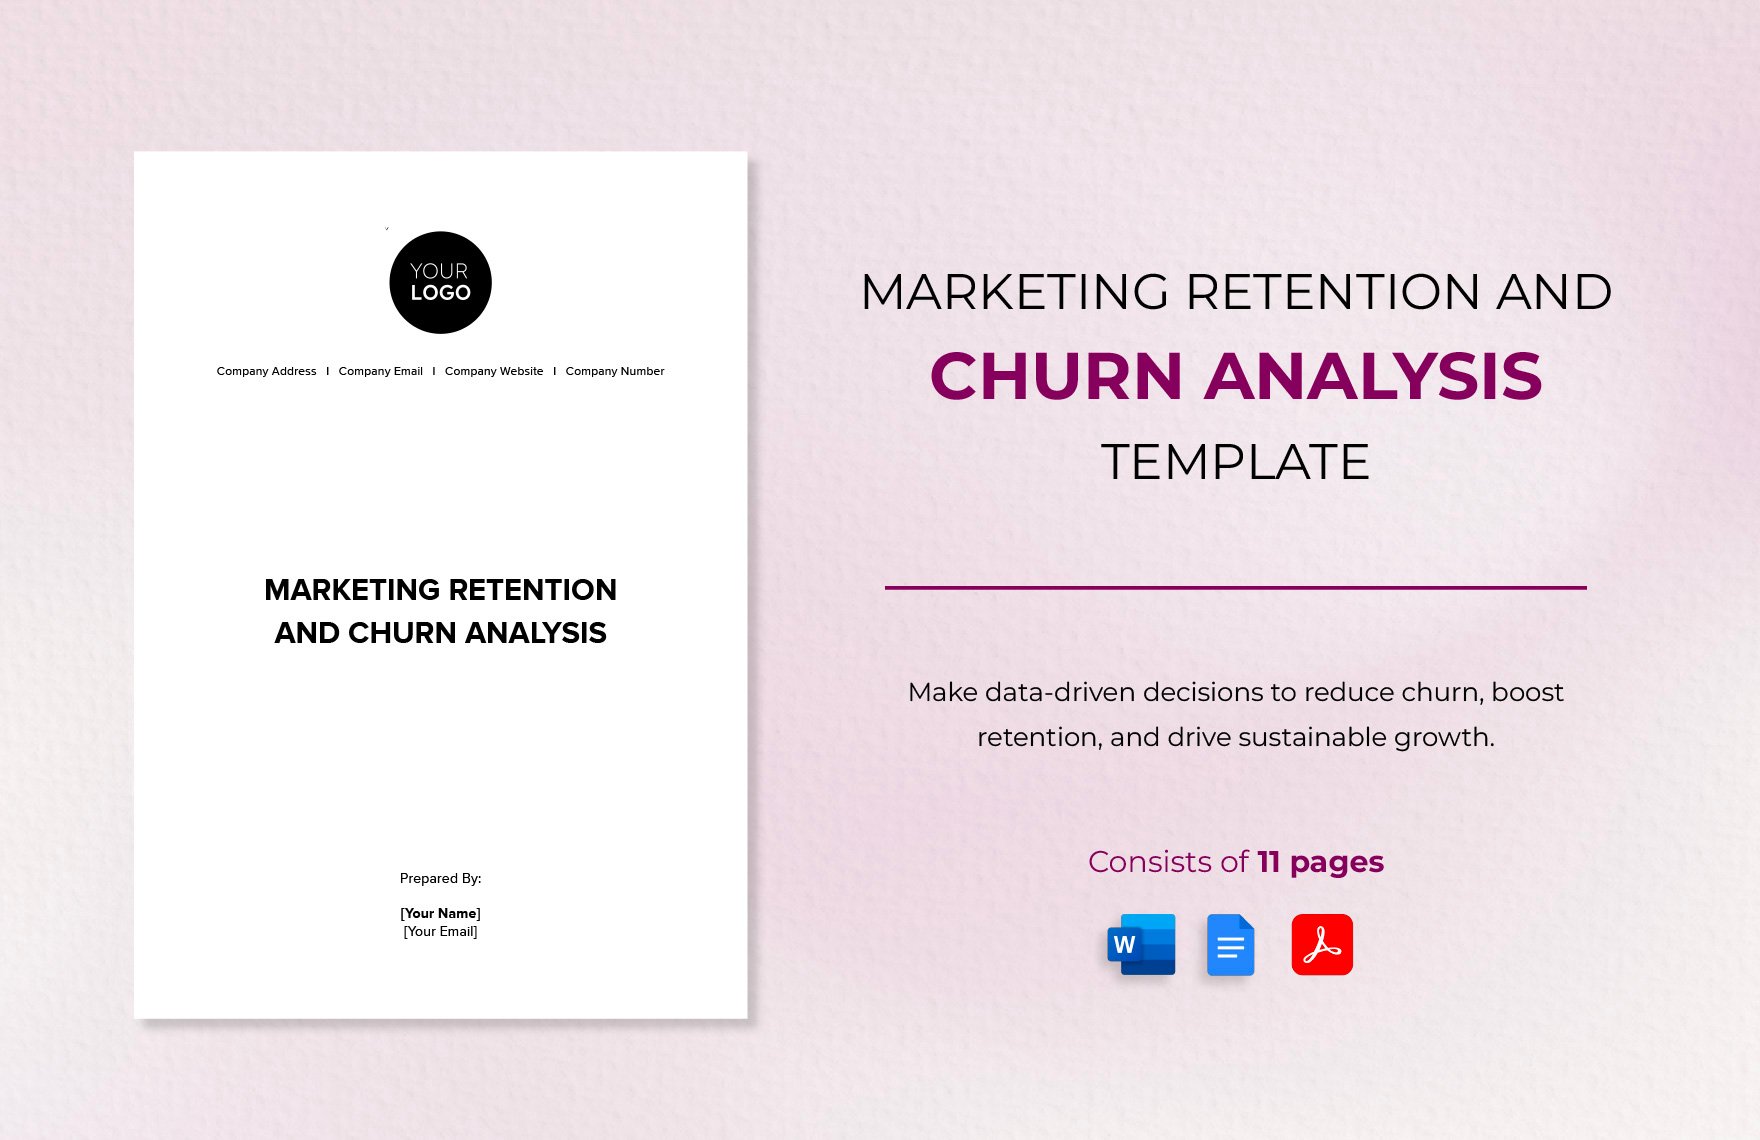 Marketing Retention and Churn Analysis Template